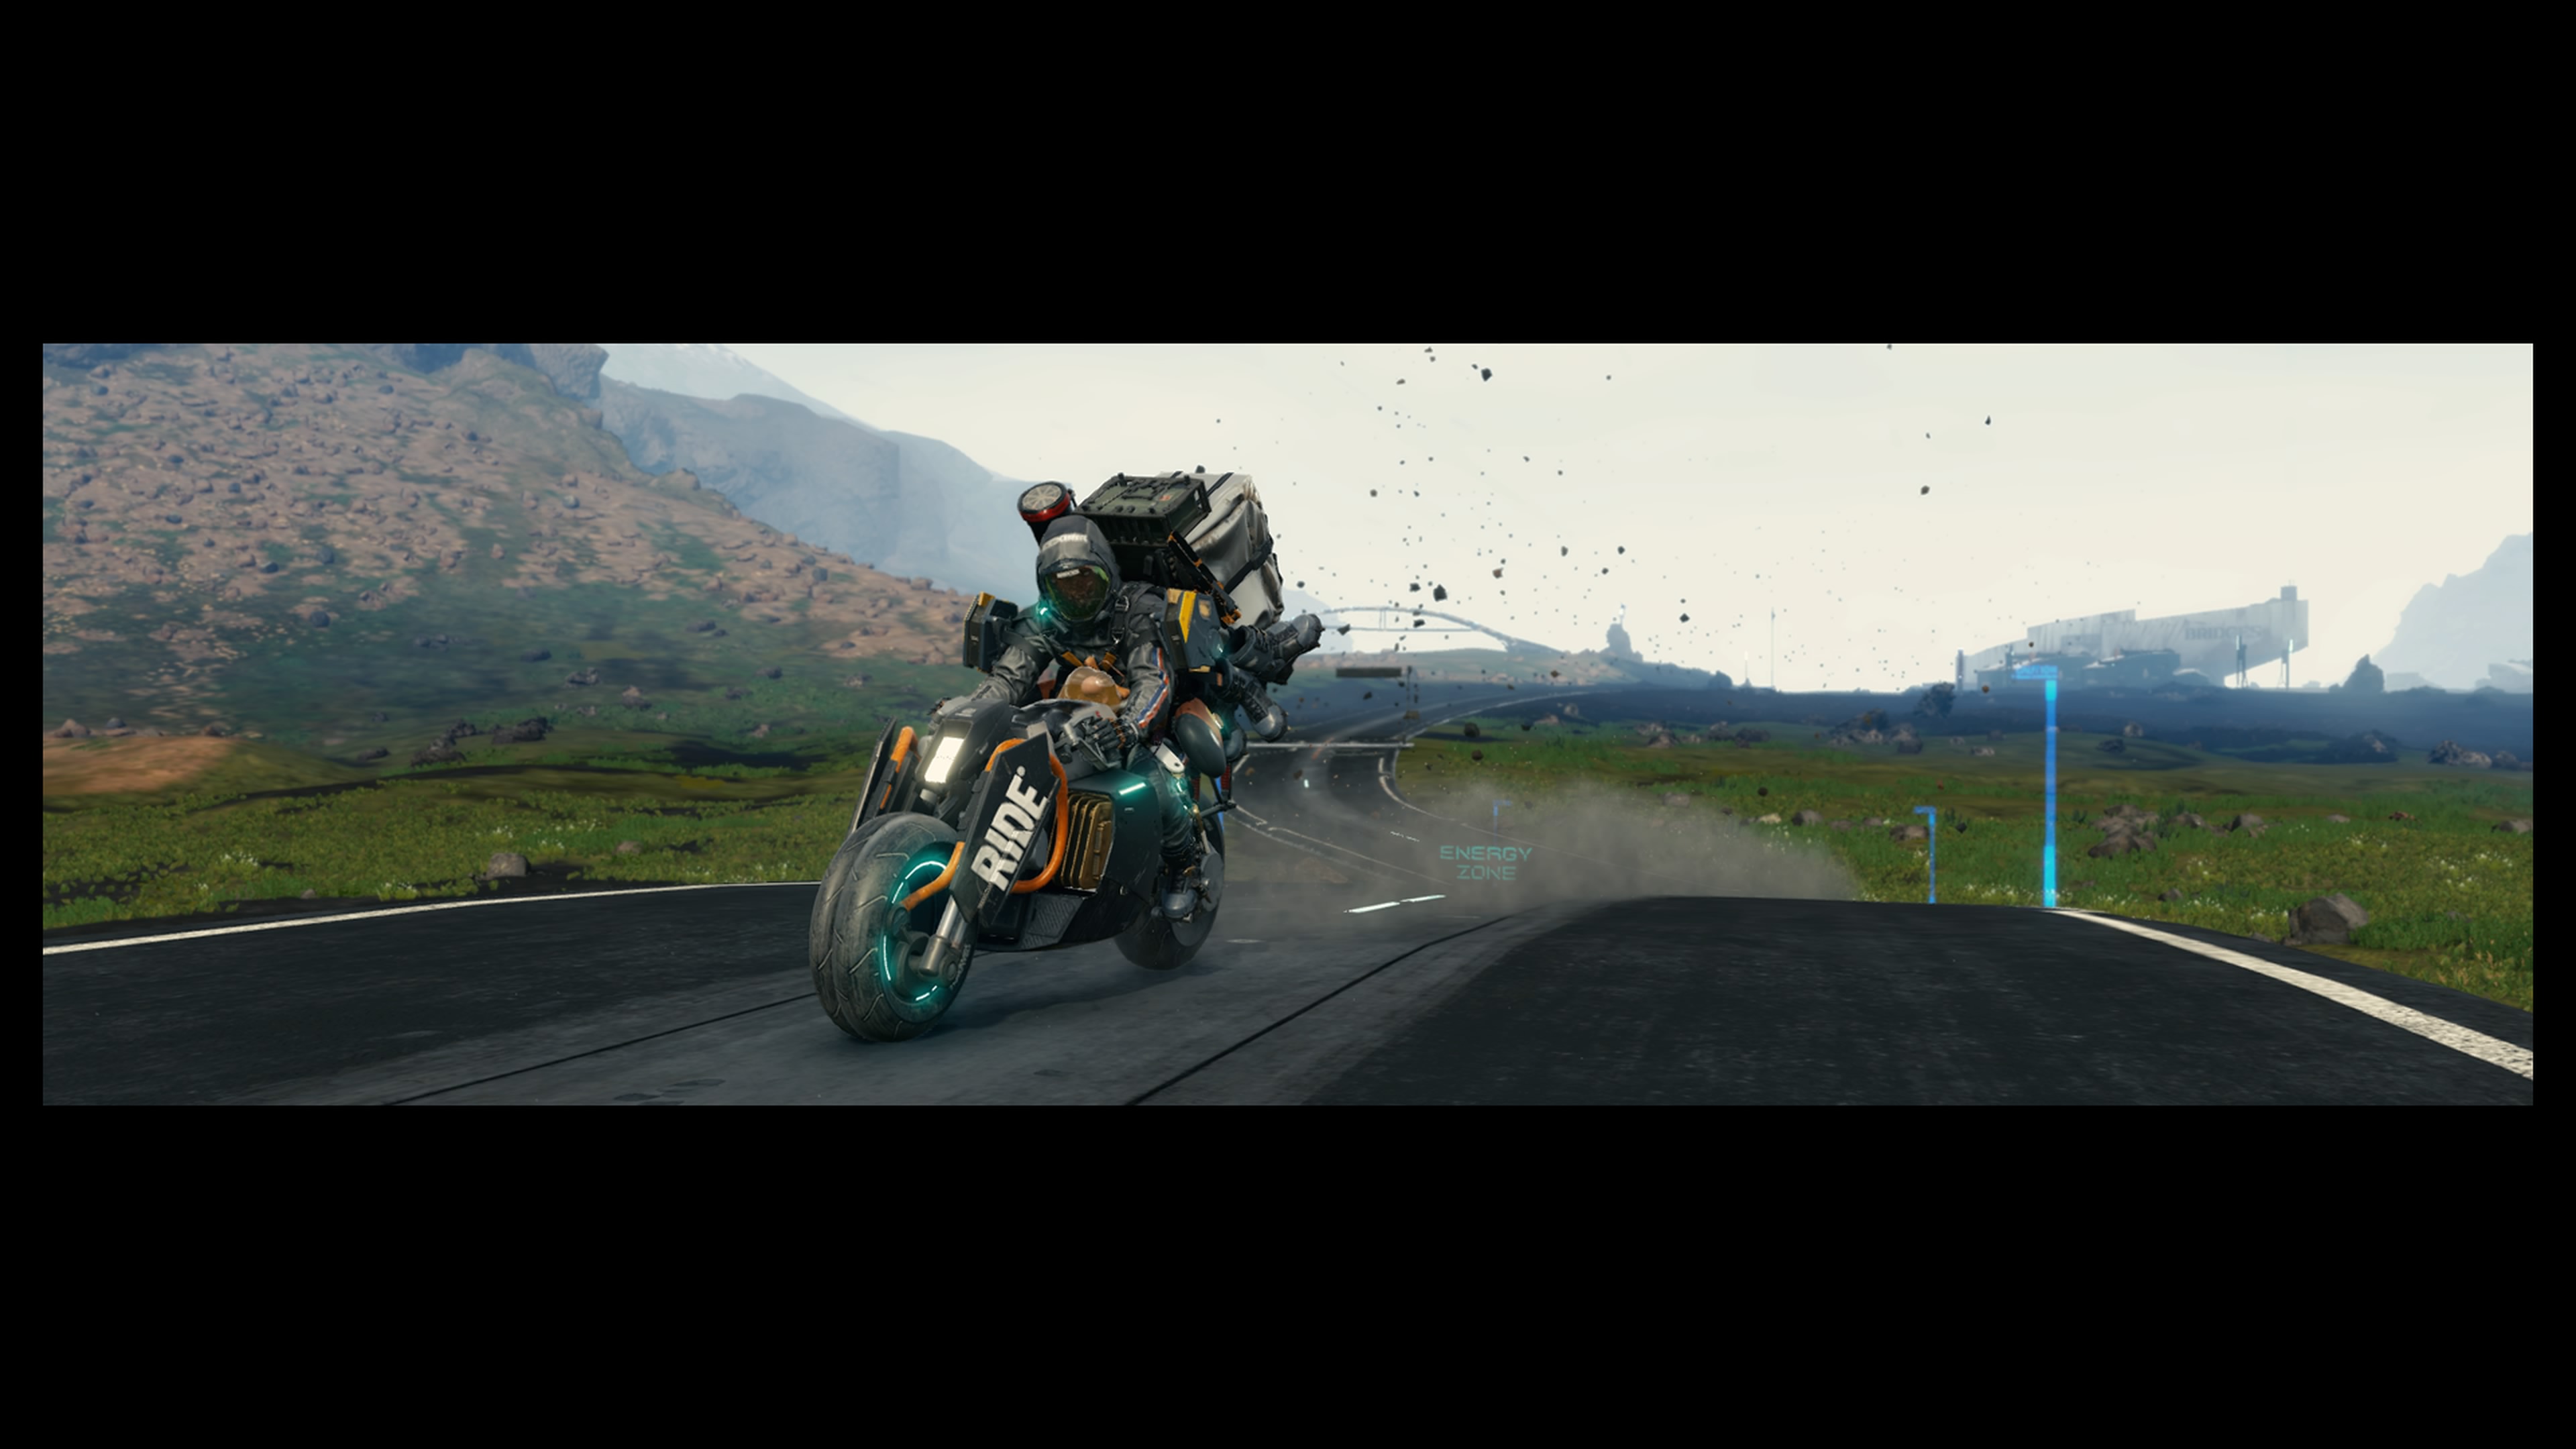 Norman Reedus Motobike Weapon Death Stranding PlayStation 4 Video Games Kojima Productions 3840x2160